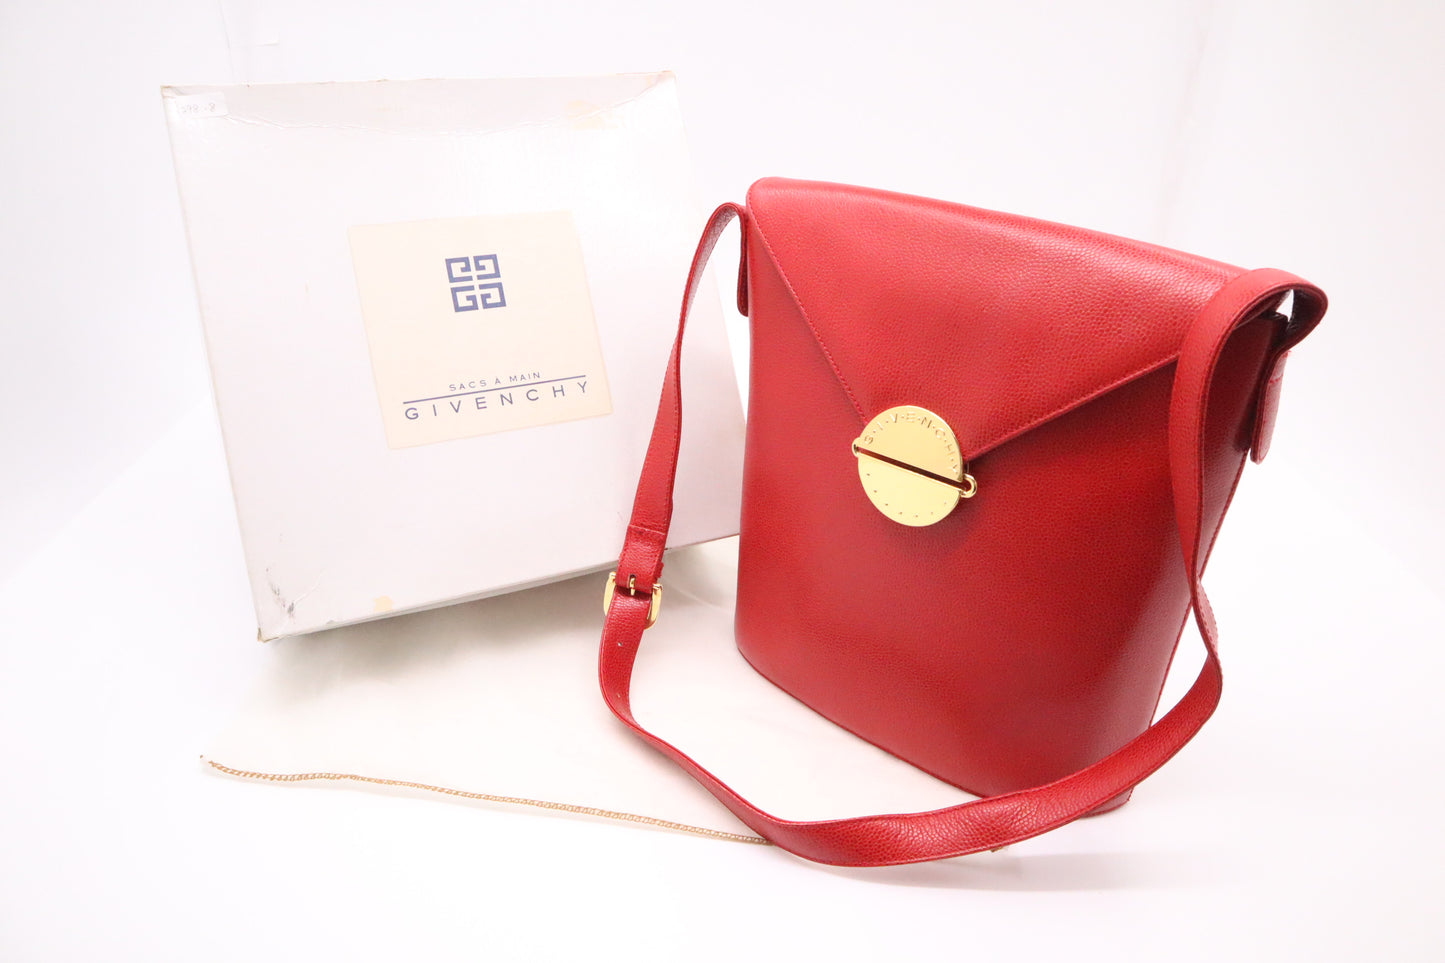 Givenchy Shoulder Bag in Red Leather